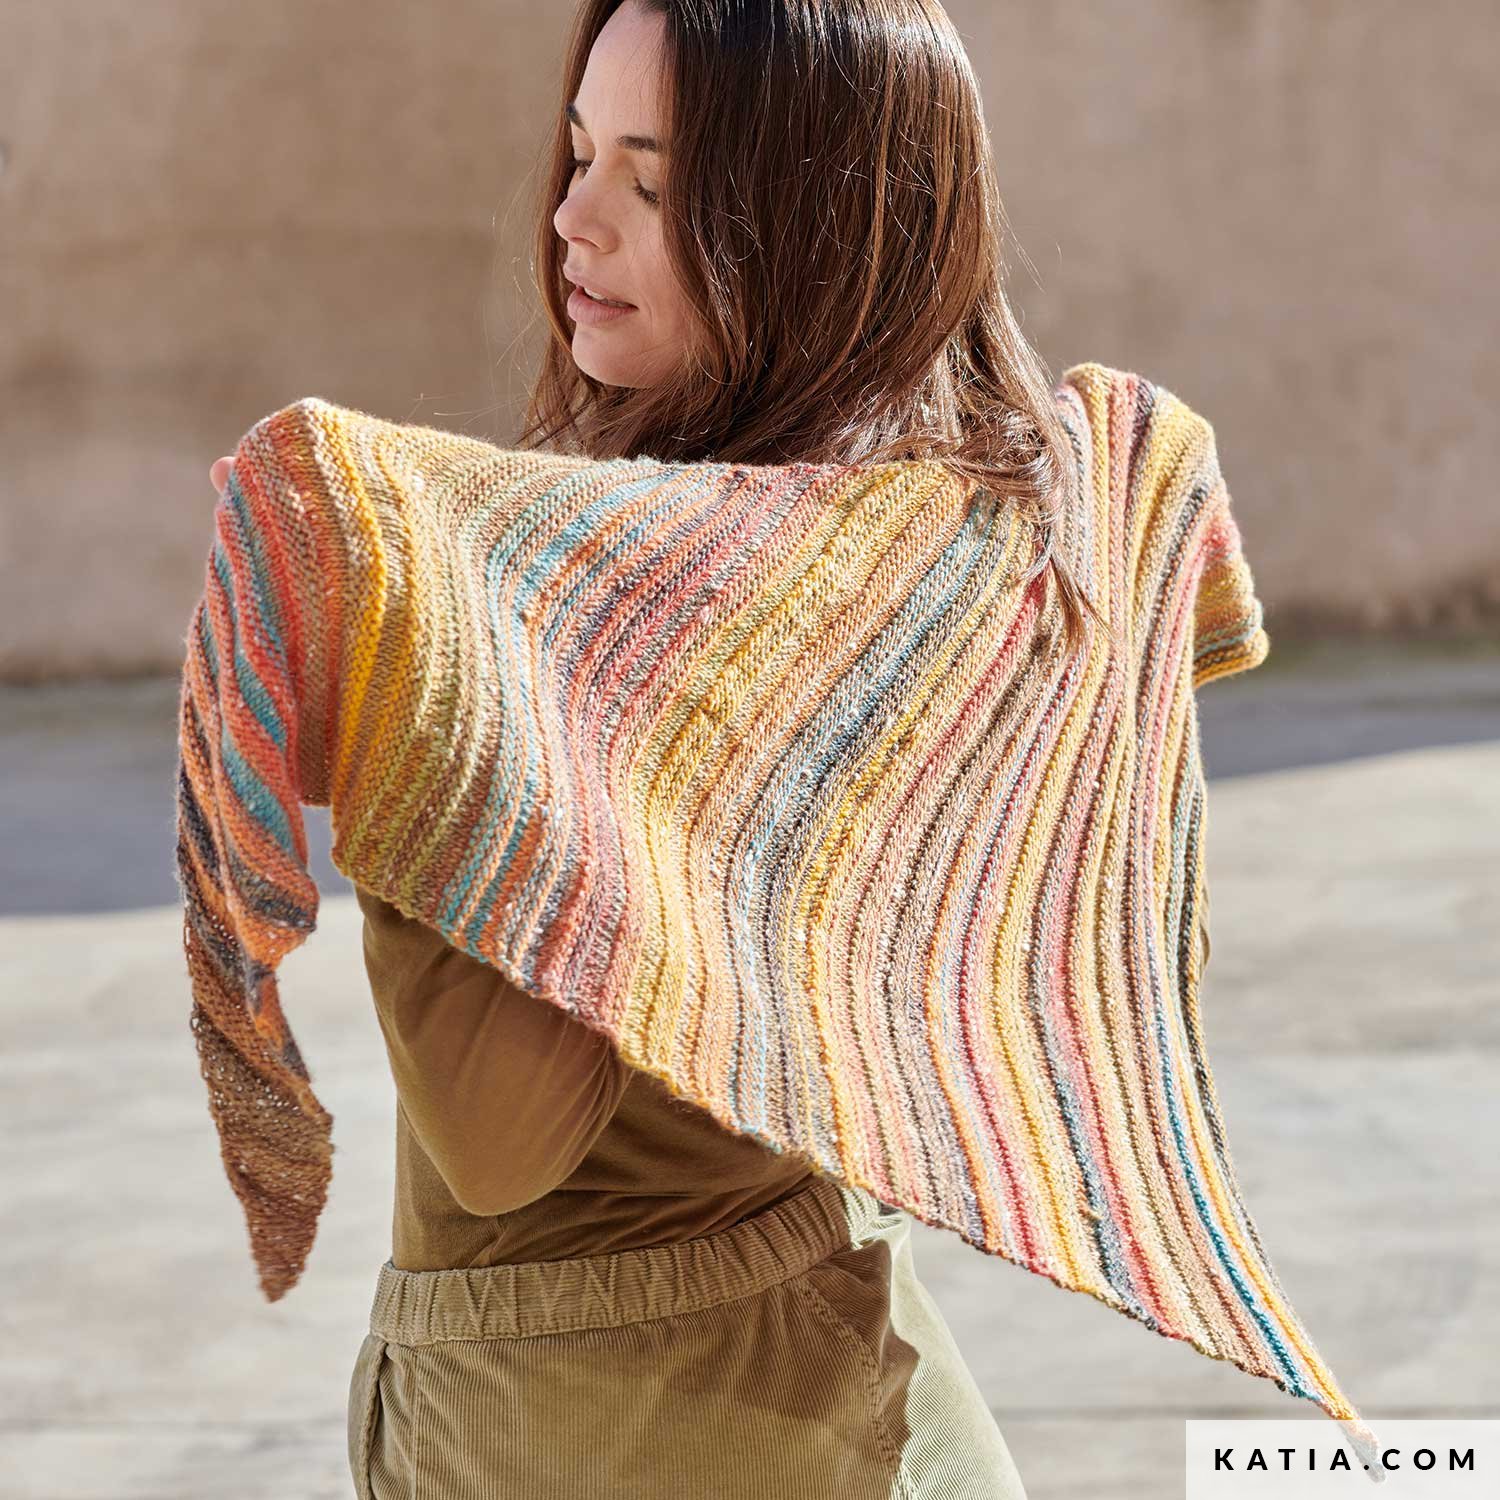 The Fleece Milano - Made in Italy Artisanal Knitwear